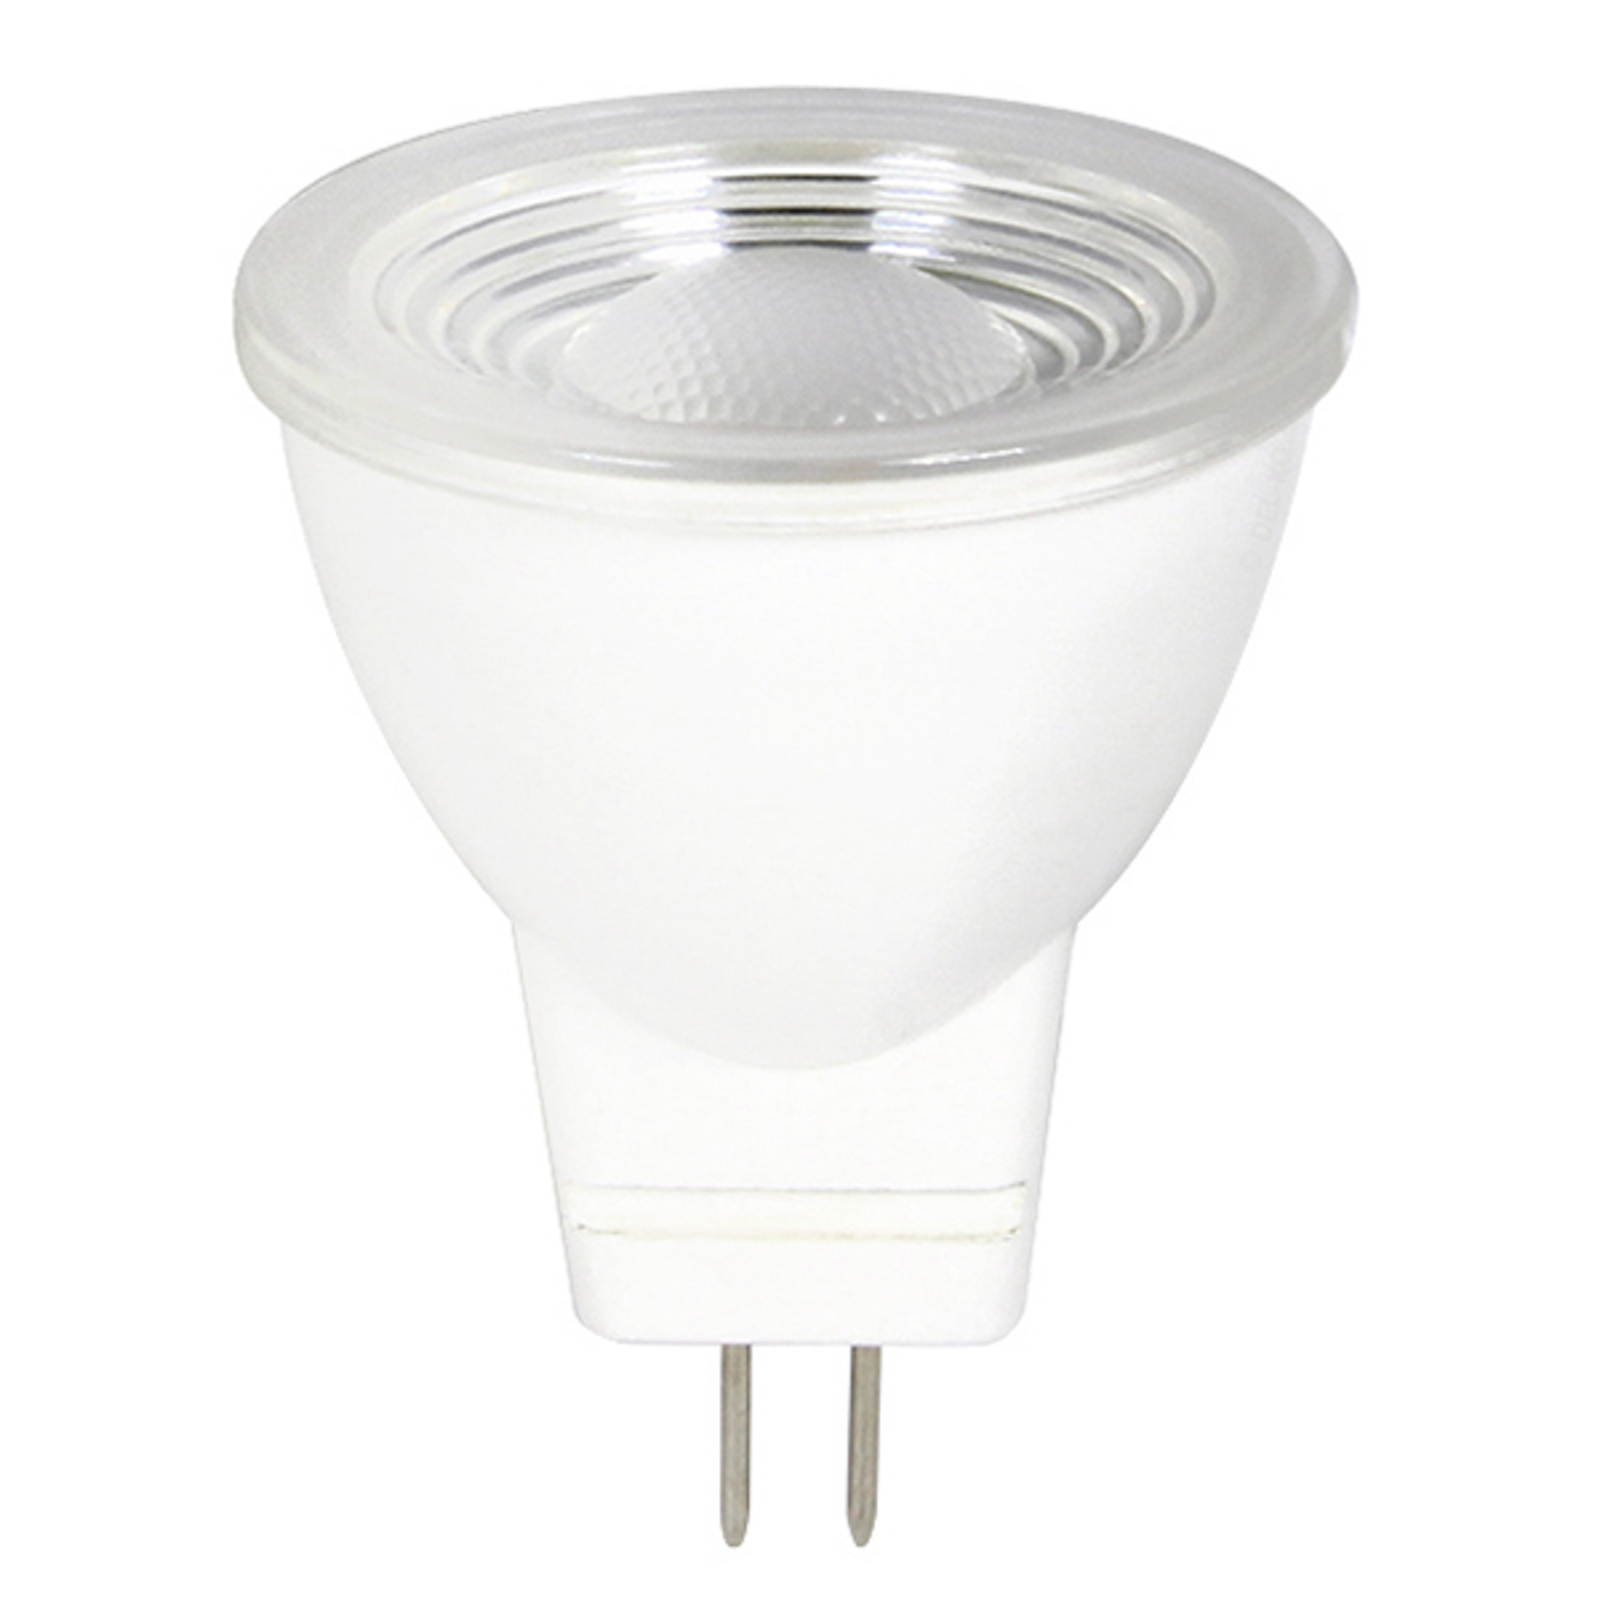 LED lamp Reflector HELSO GU4 MR11, 4W, 830, 60°